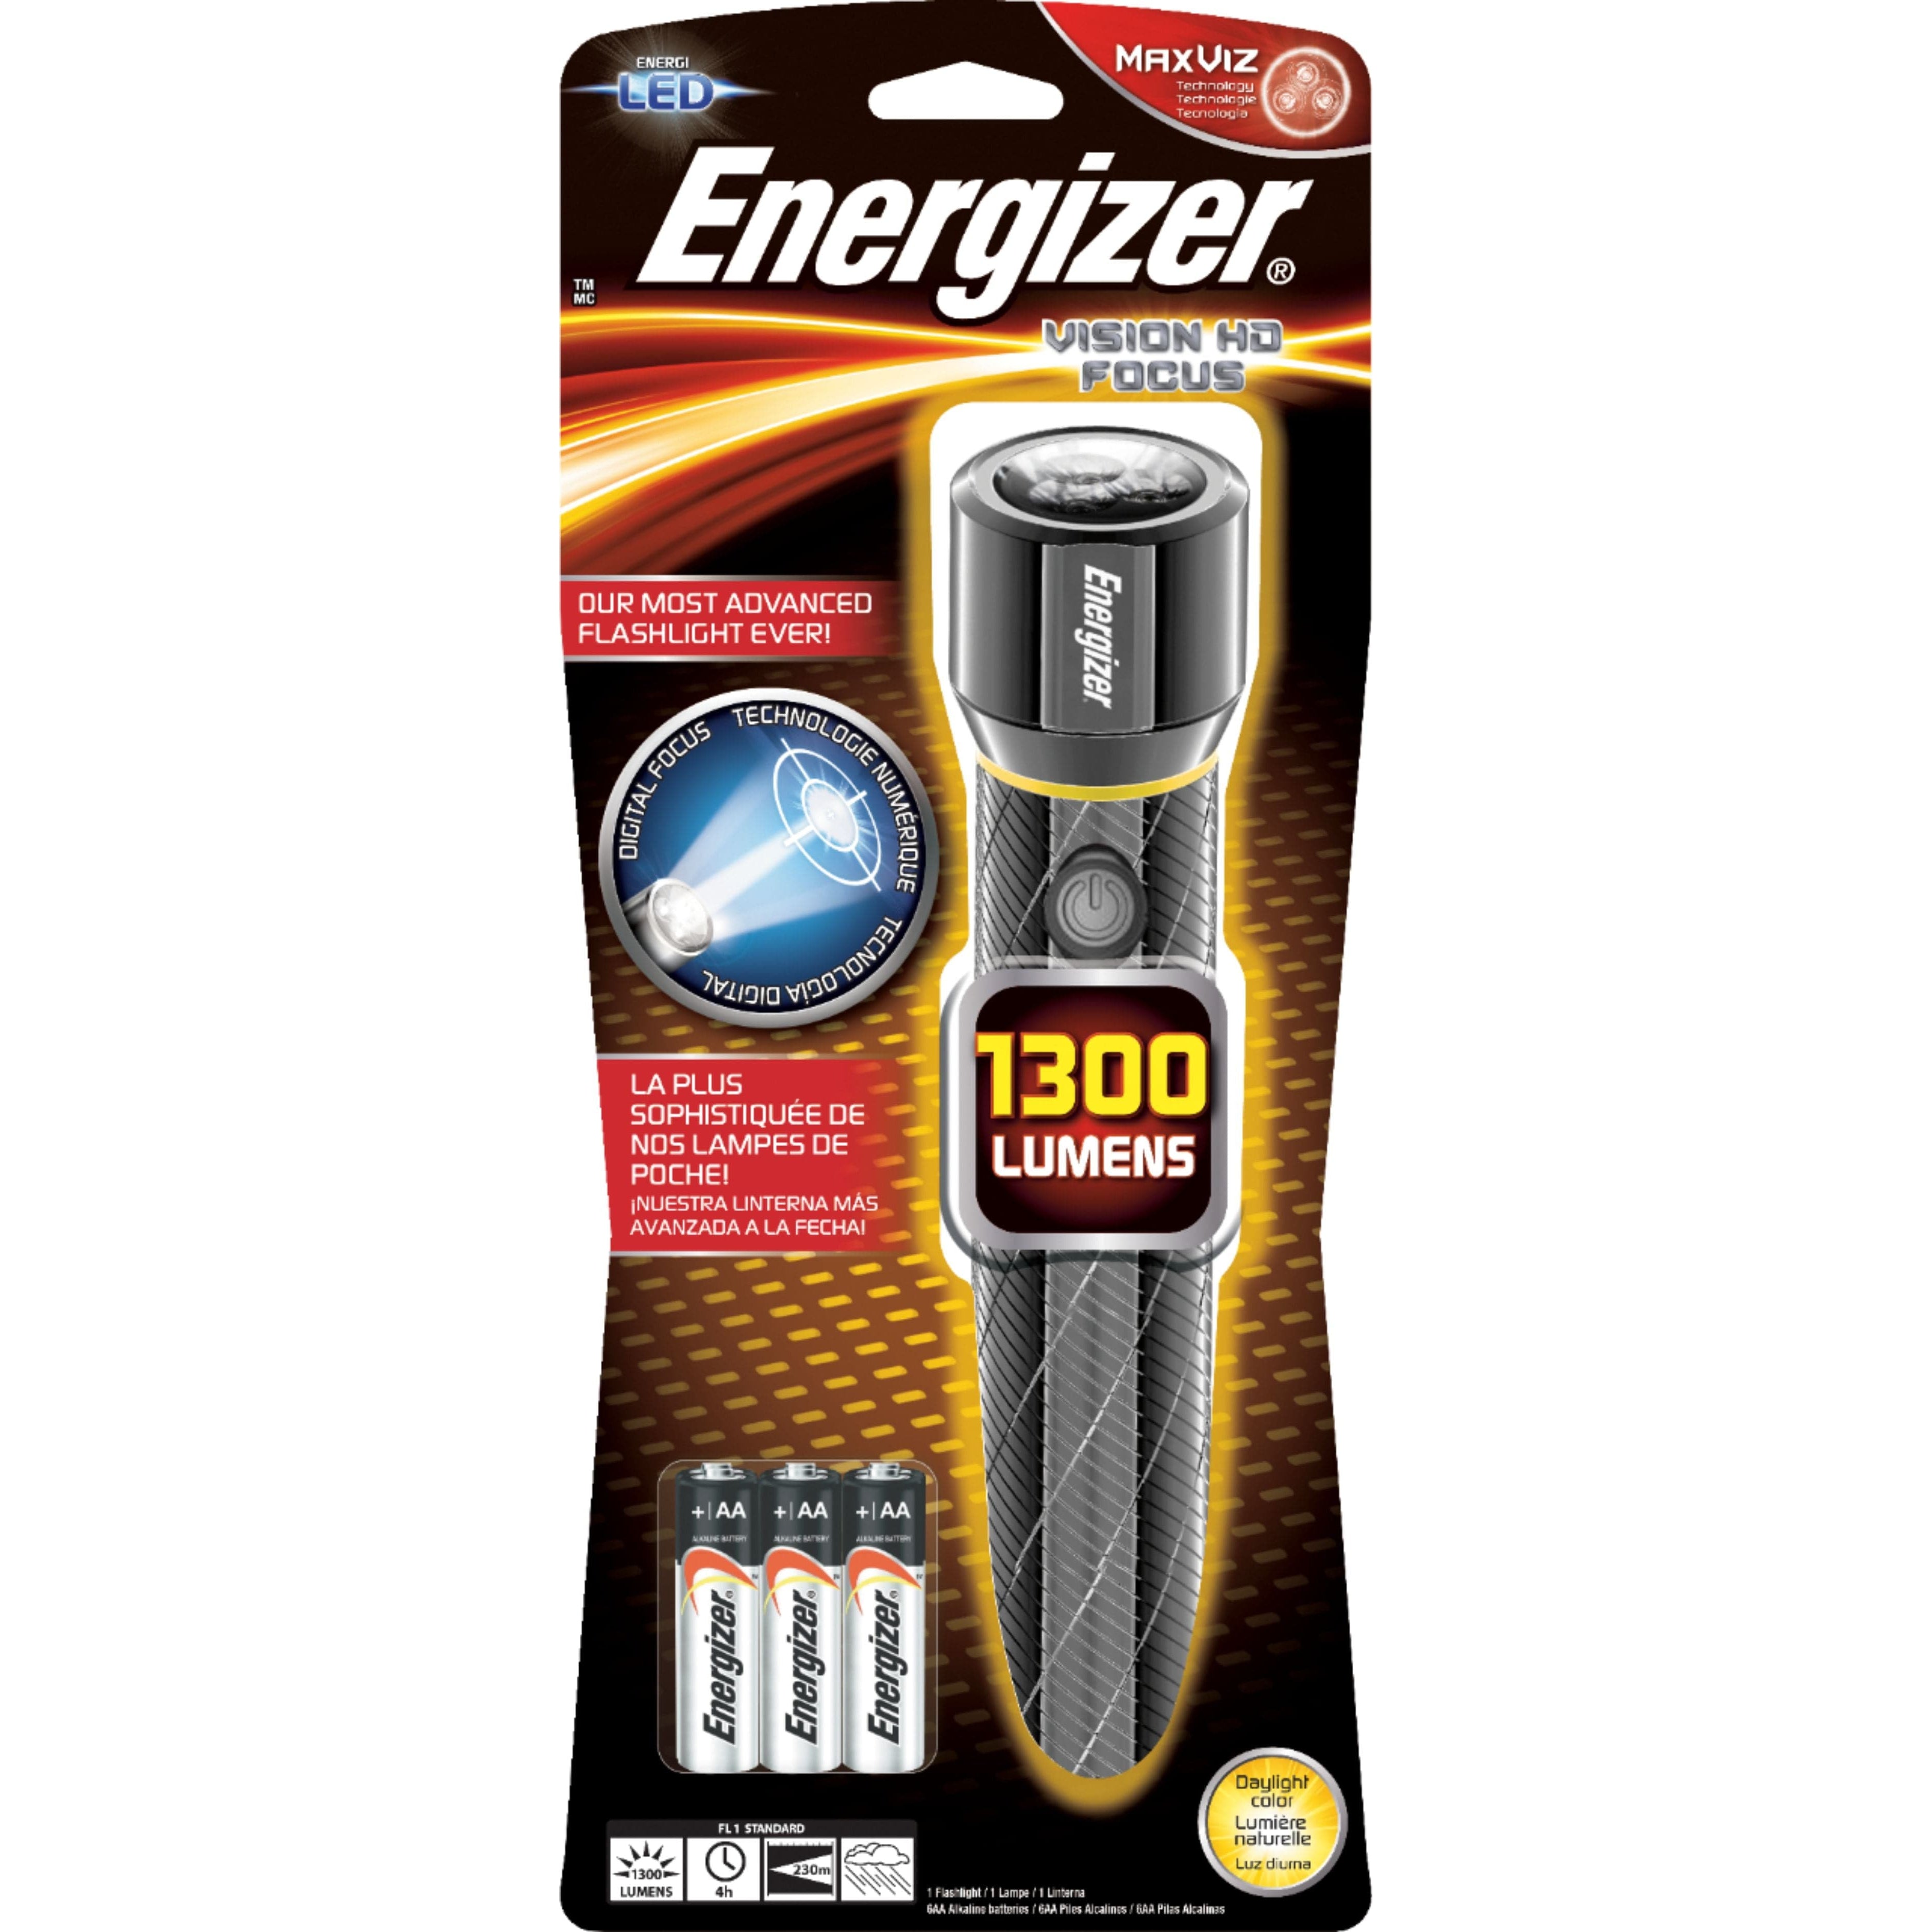 Lampe de poche Energizer (6AA / 1300 lumens)